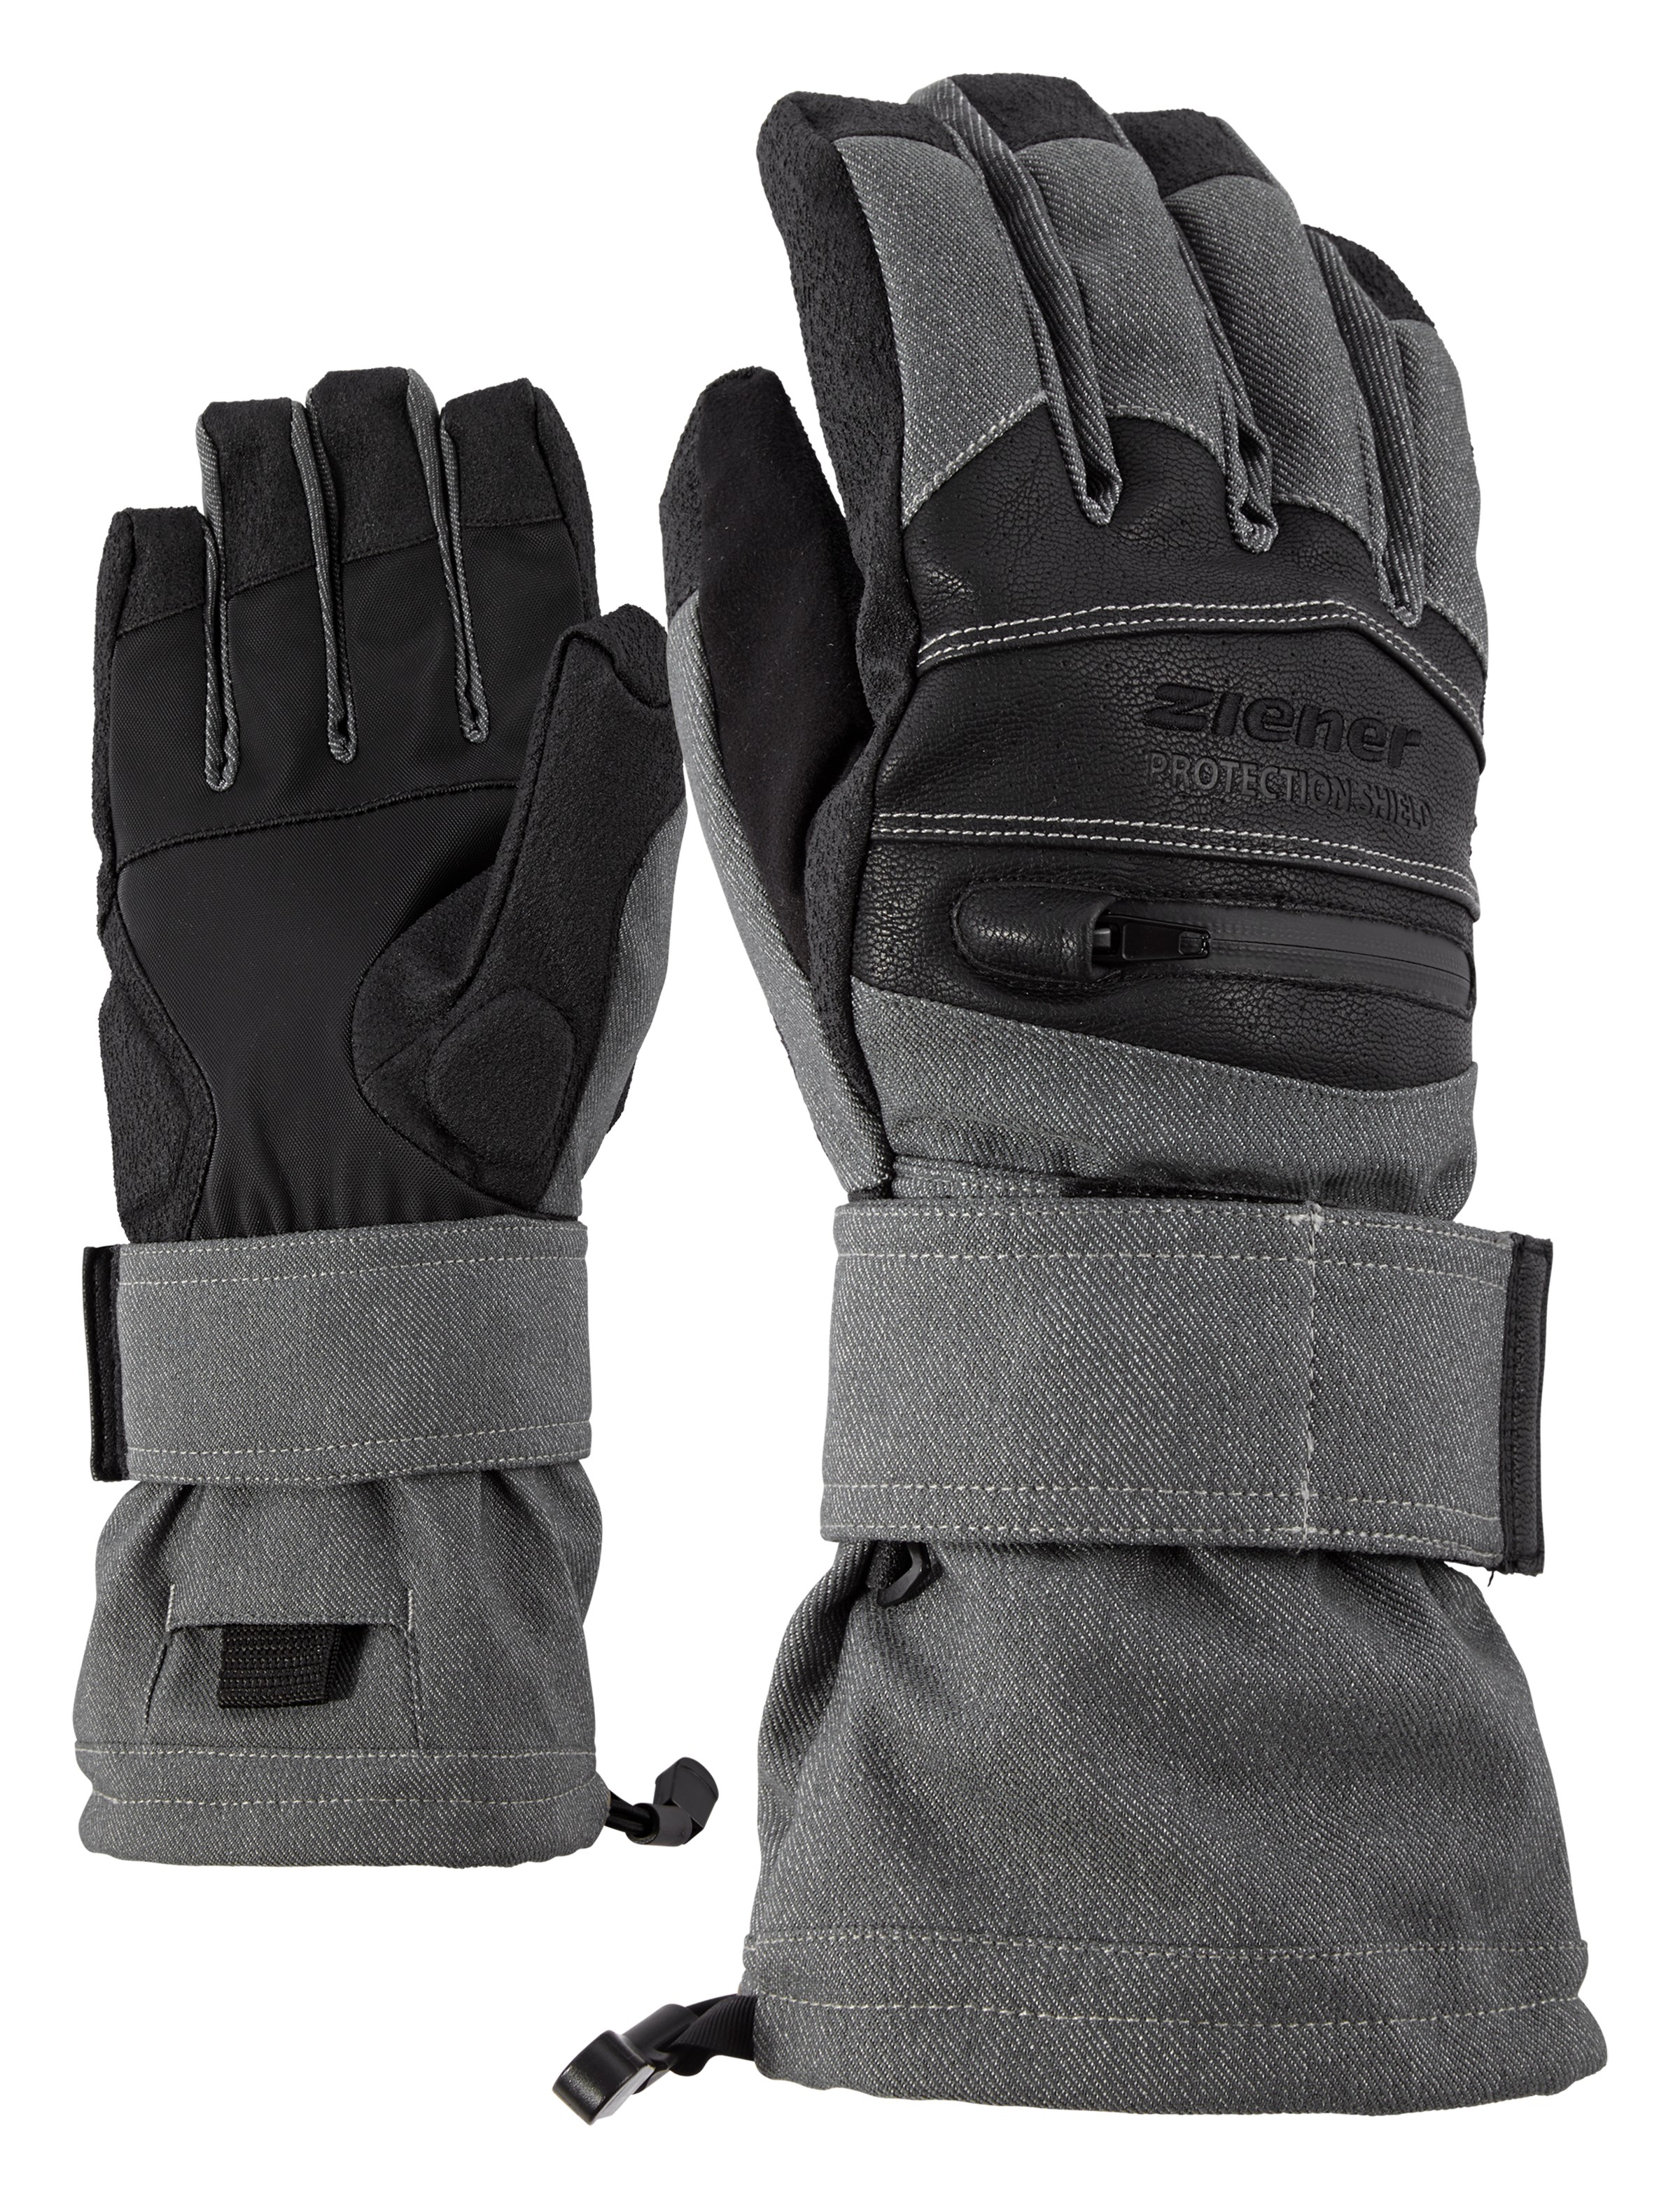 Ziener Midlife -grey 17/18 denim Glove AS(R)